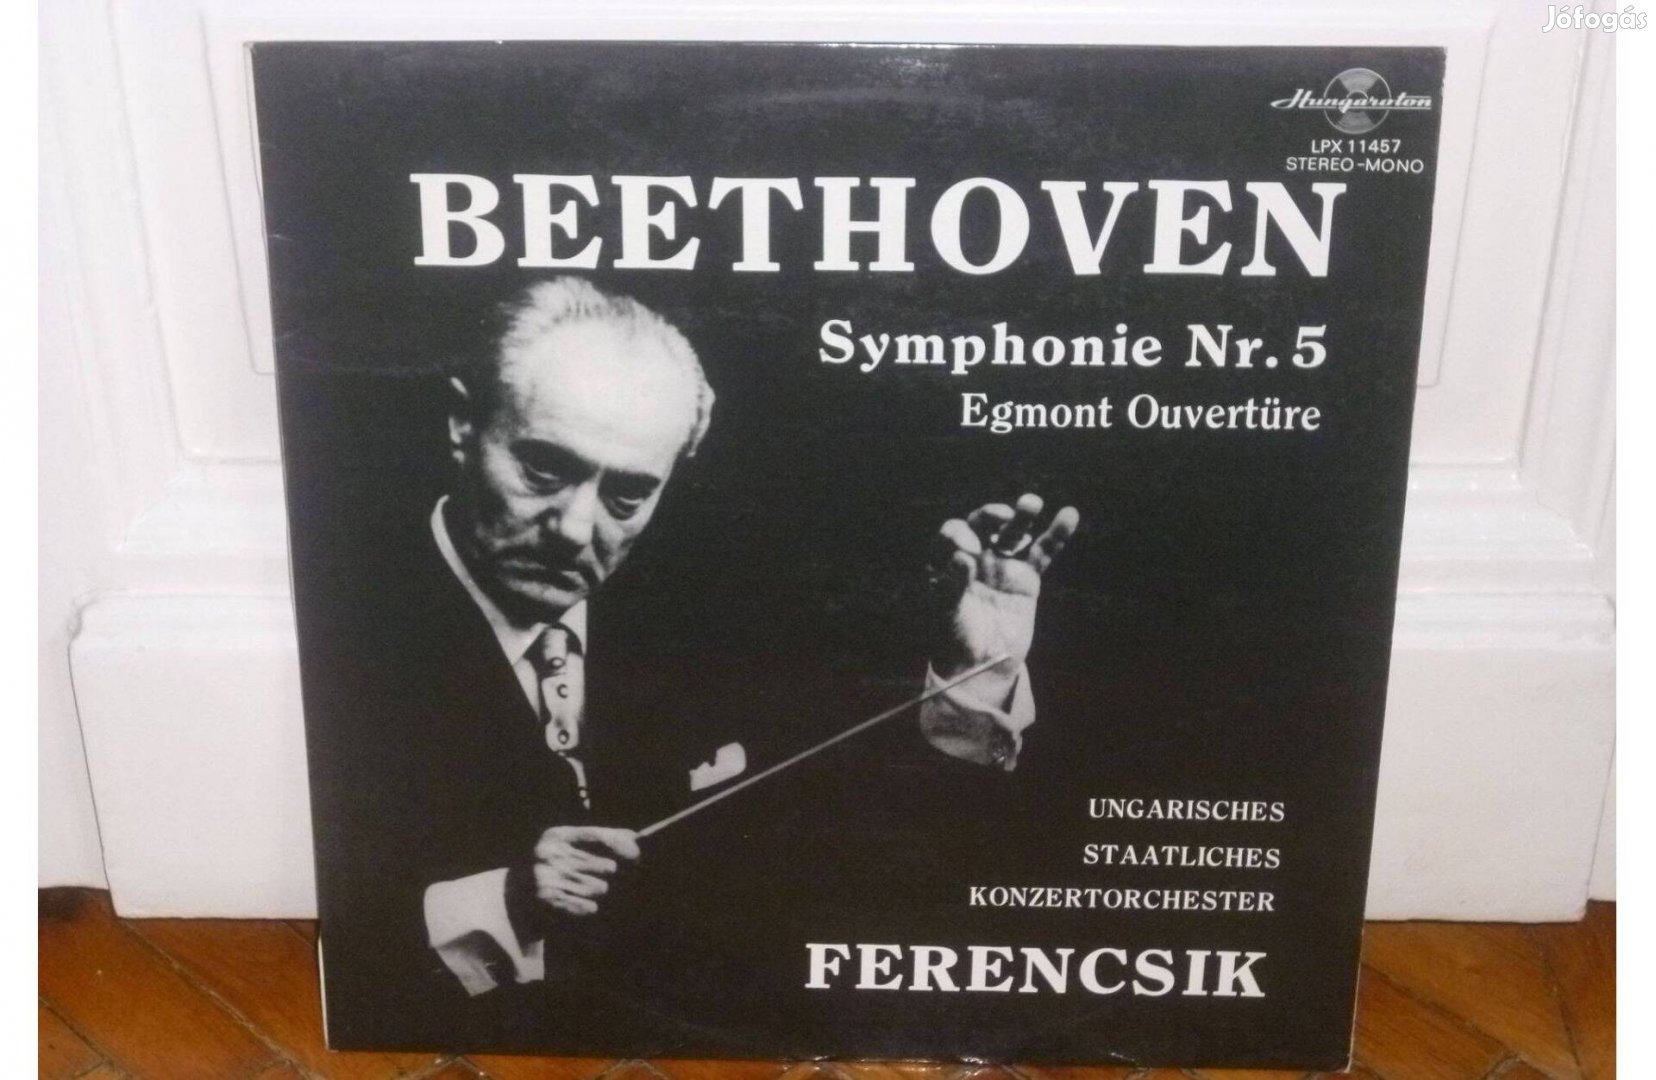 Beethoven - Symphony Nr. 5 / Egmont Ouvertüre LP